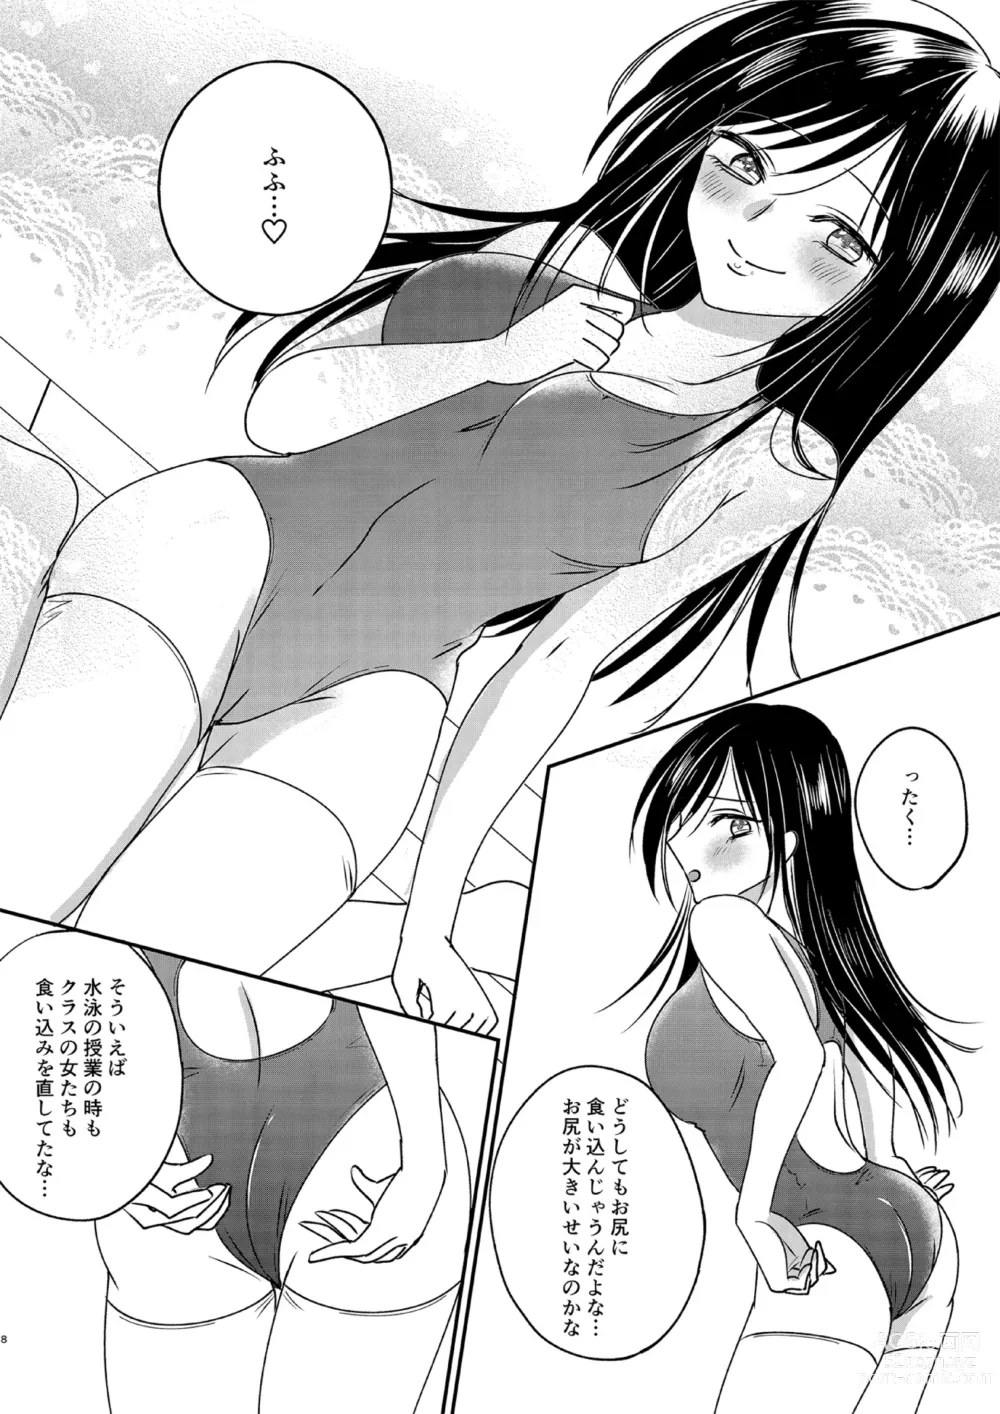 Page 8 of doujinshi Irekawari Cinderella 3